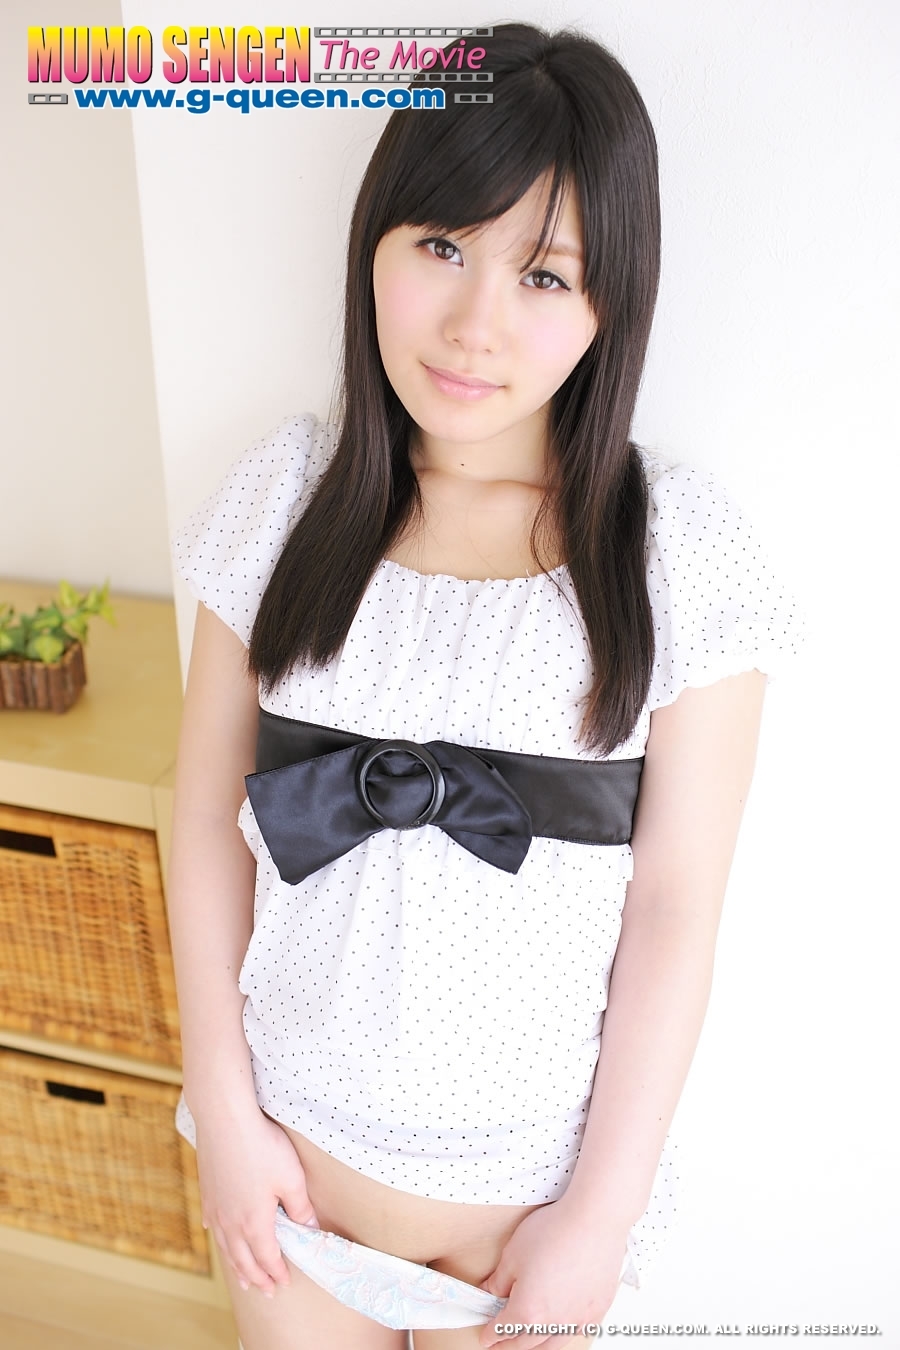 Small tits and shaved pussy of cute asian girl Atsuko Kitamura photo